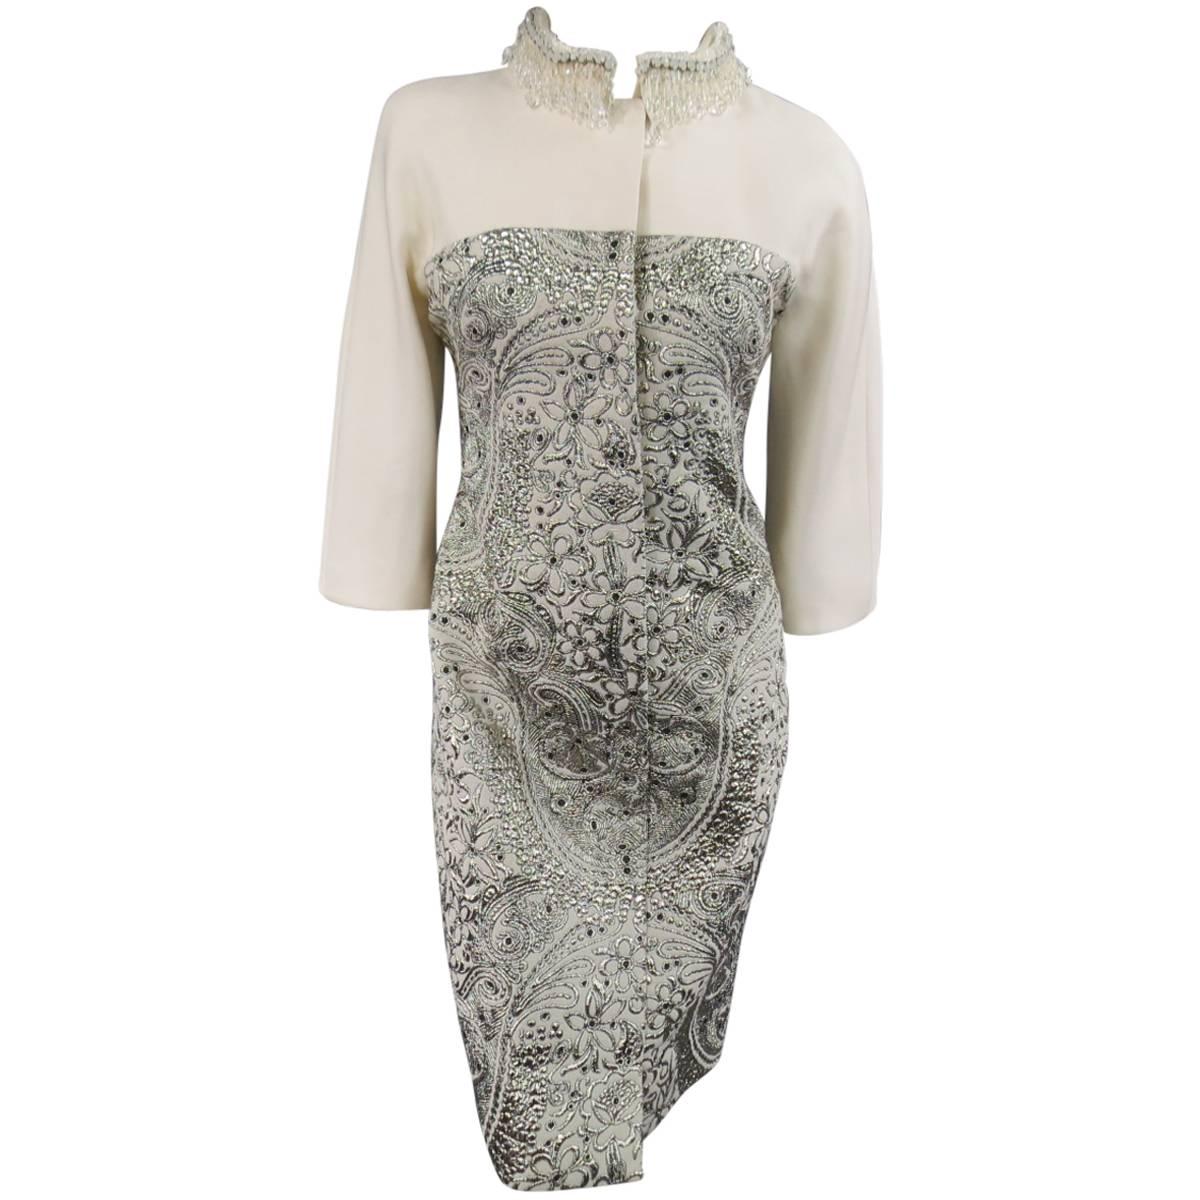 Giambattista Valli Couture Cream and Silver Beaded Coat Dress - Retail $9600